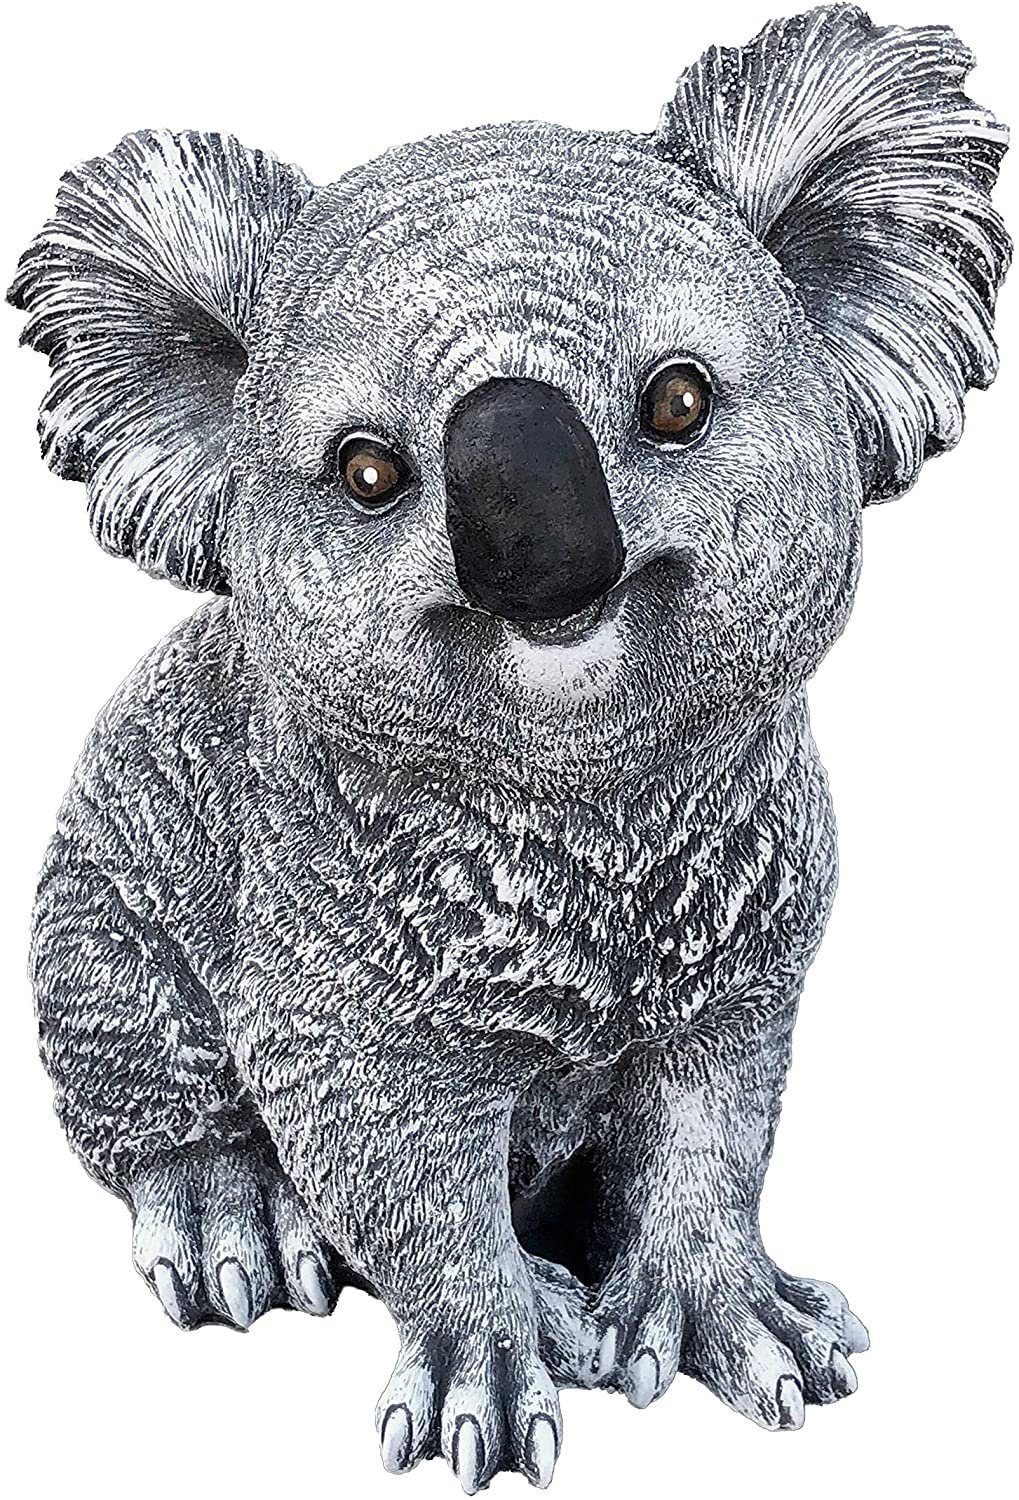 Stone and Style Gartenfigur Steinfigur Koala Bär